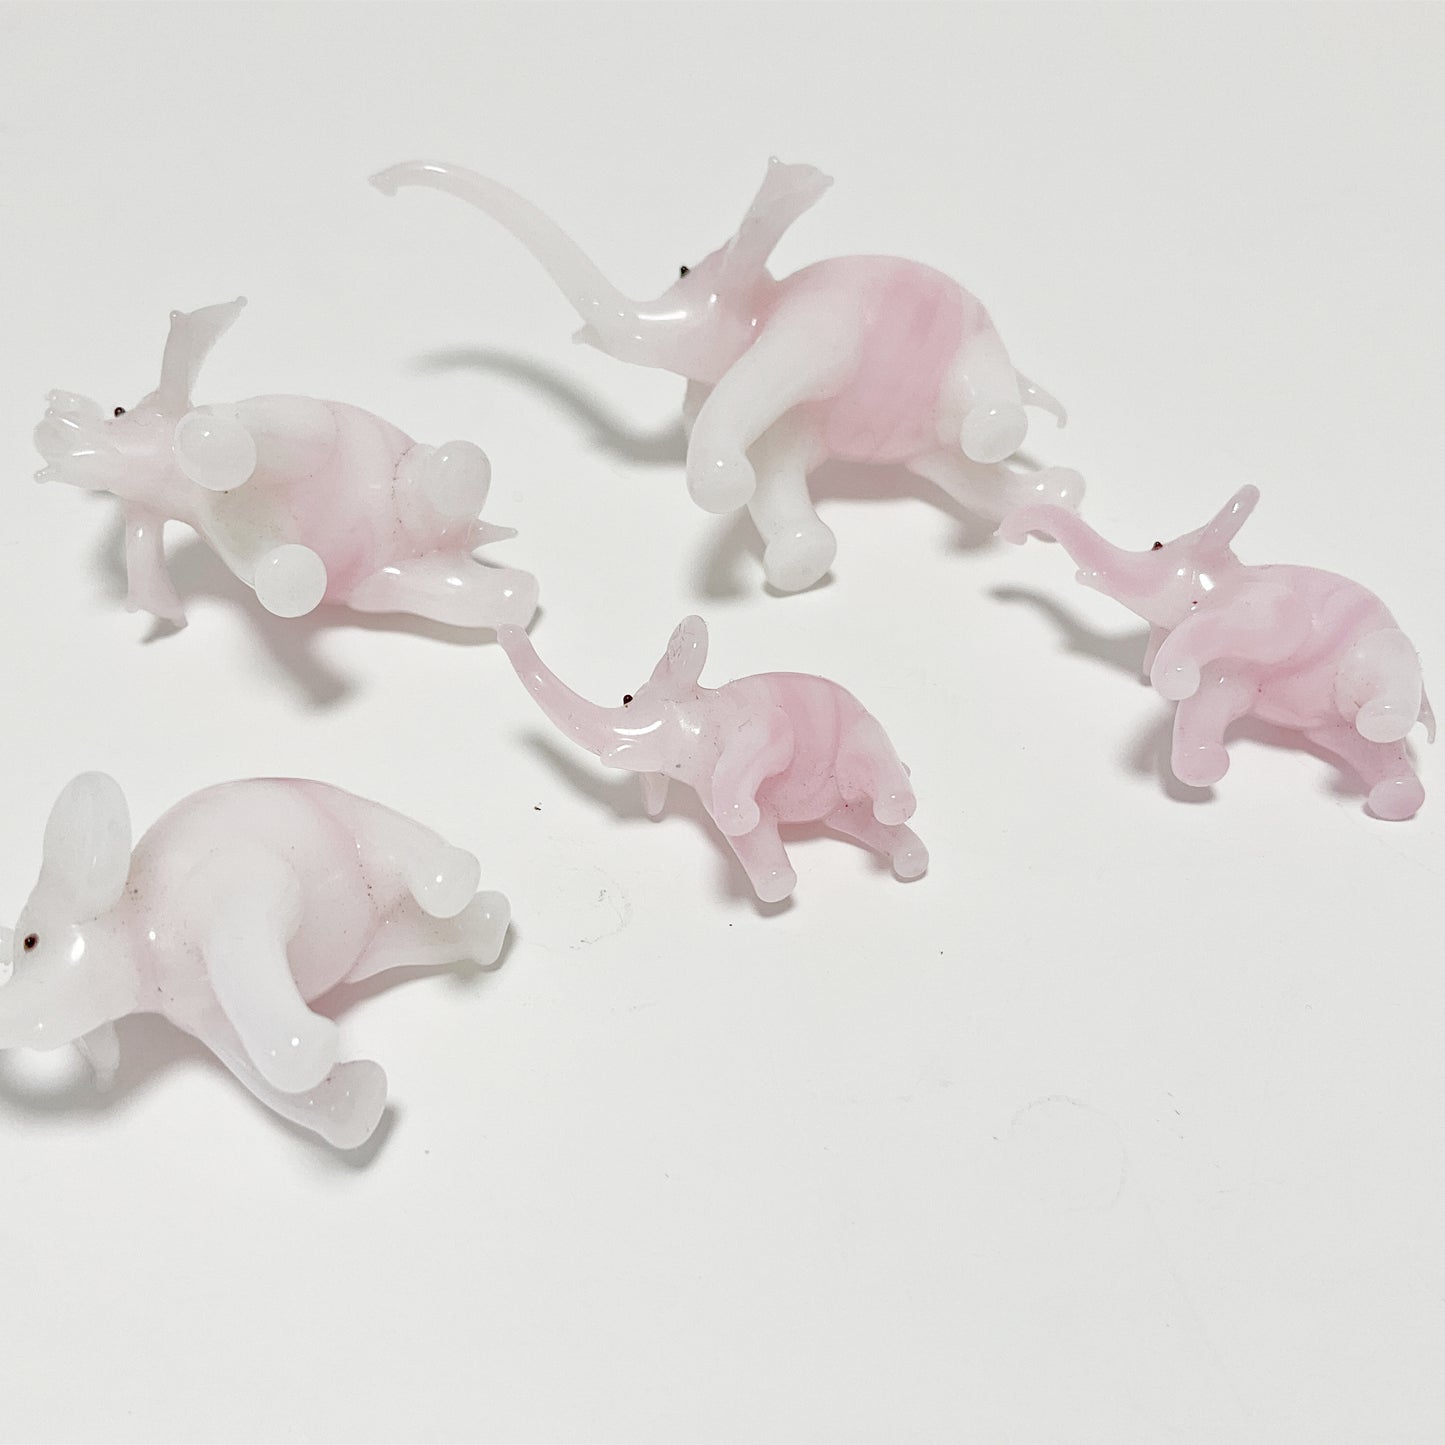 Vintage Glass Miniature Elephant Family